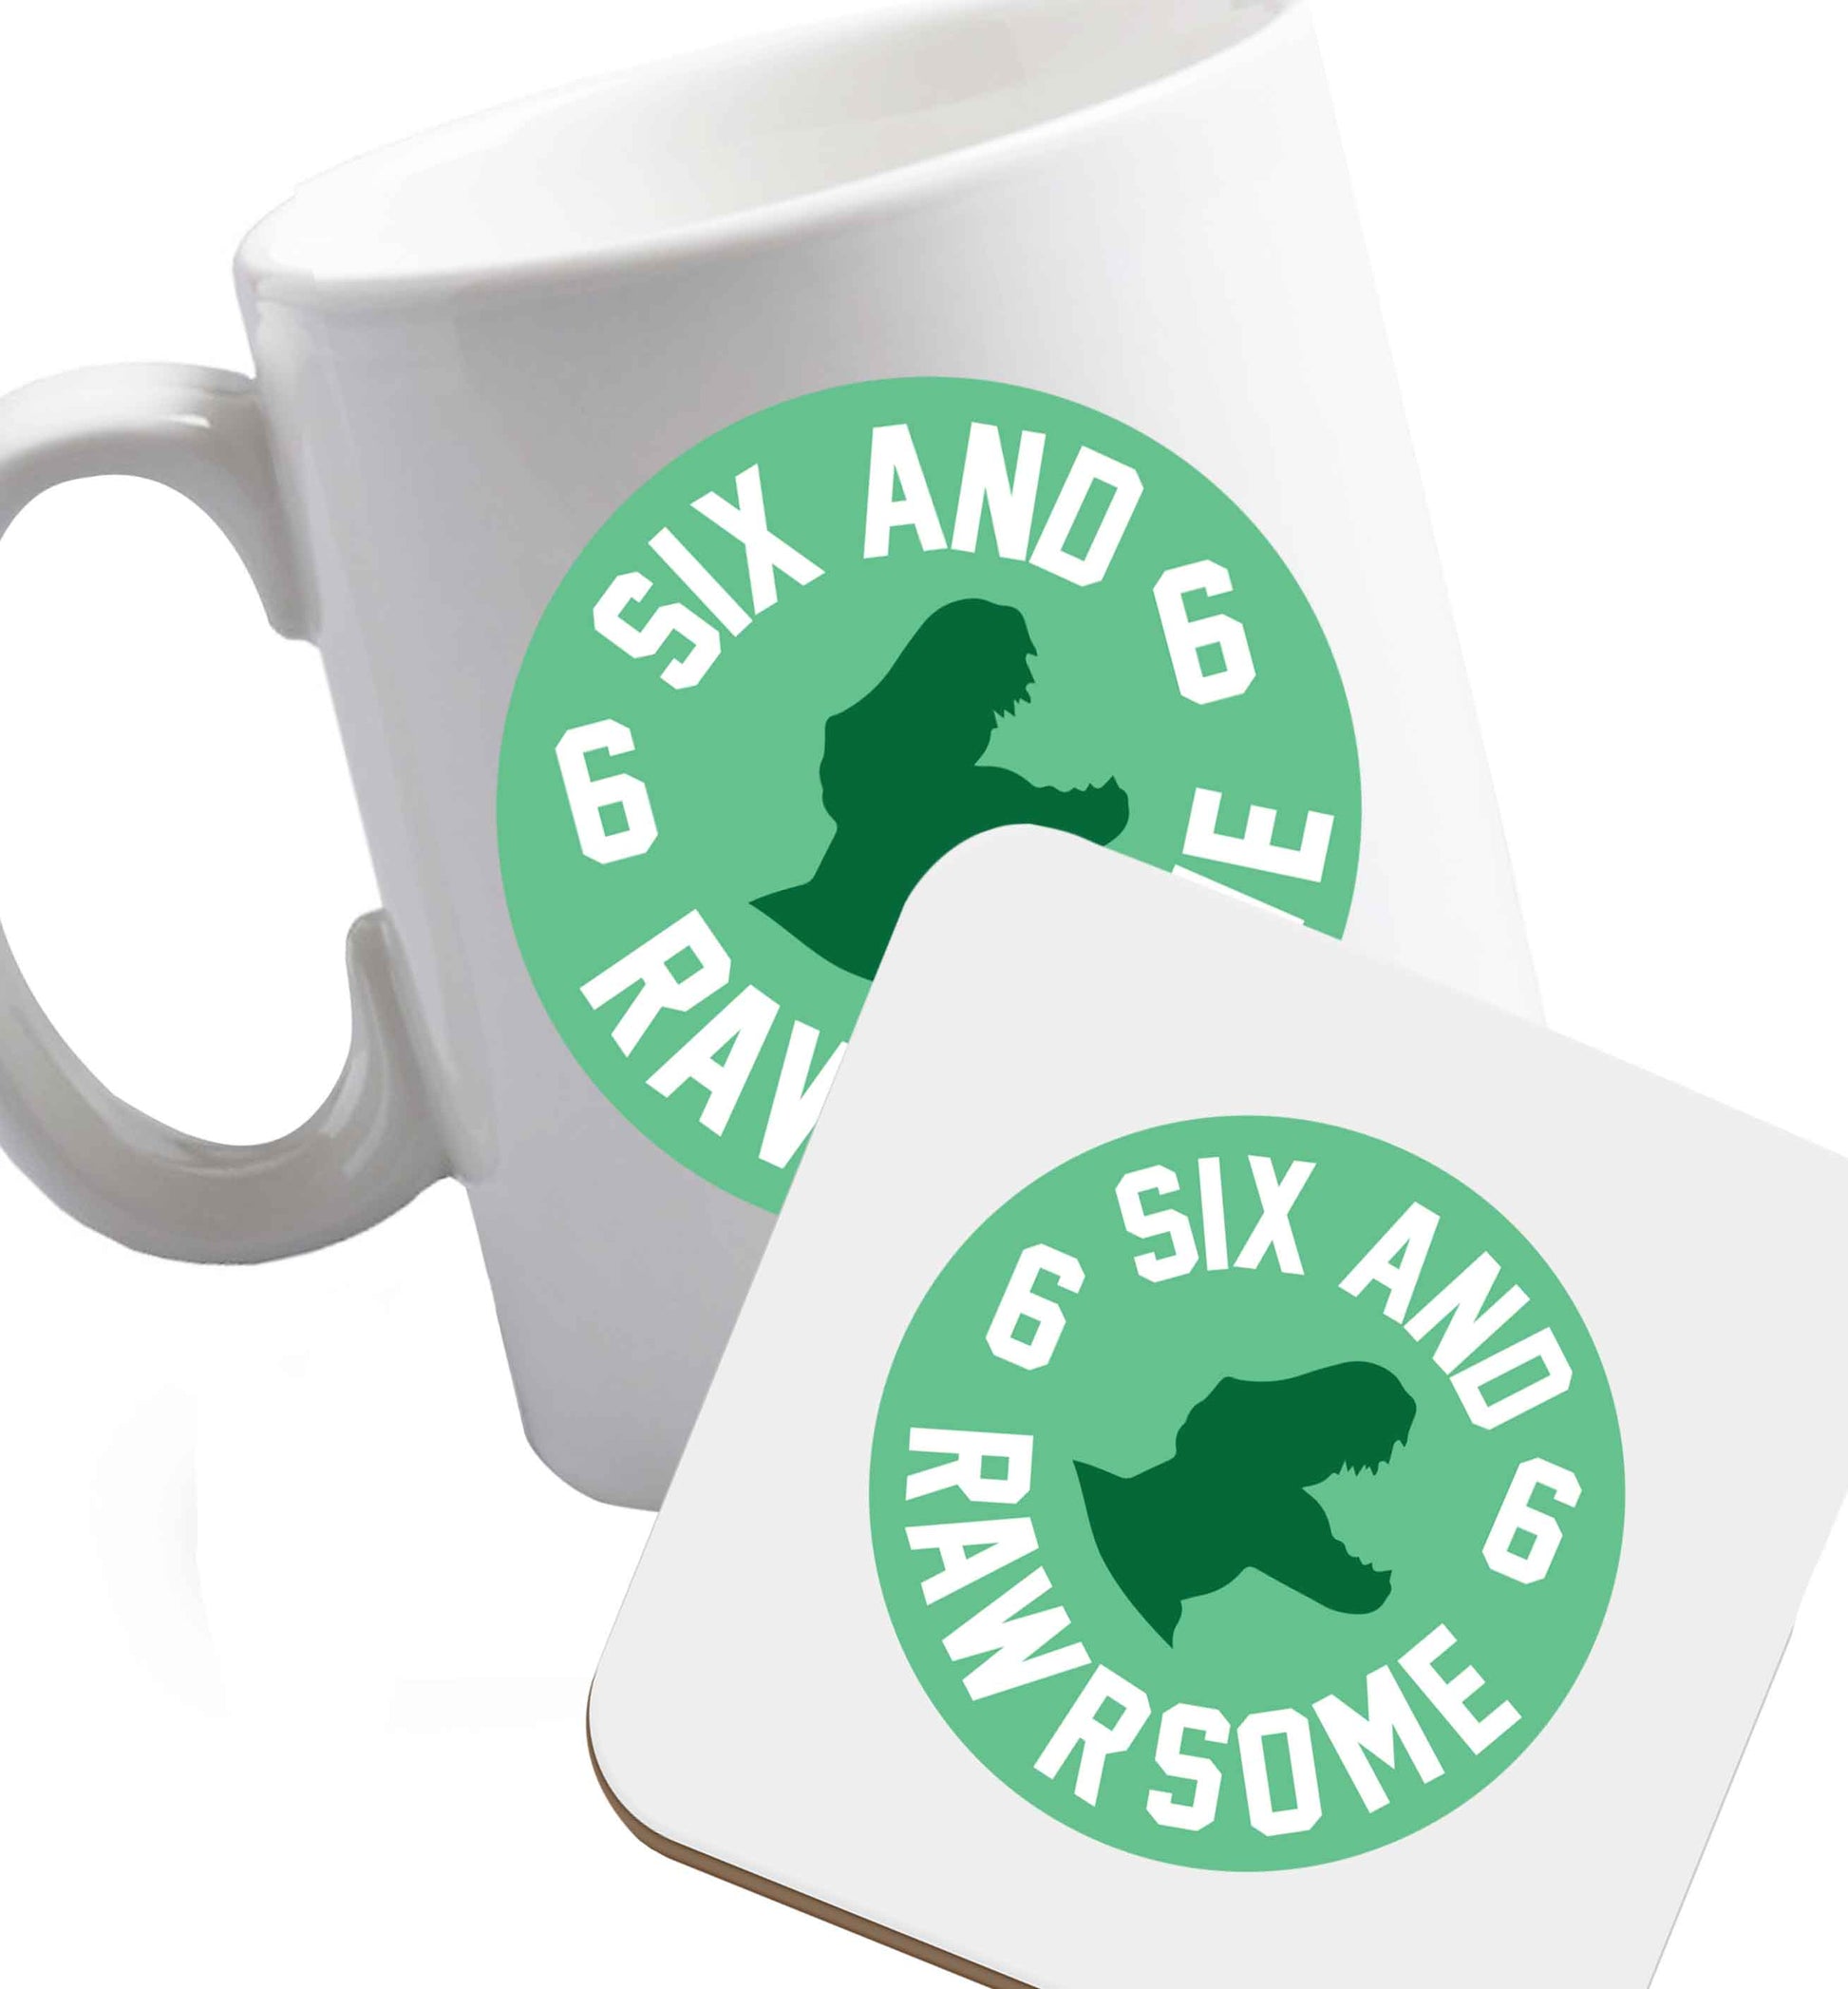 10 oz Six and rawrsome ceramic mug and coaster set right handed